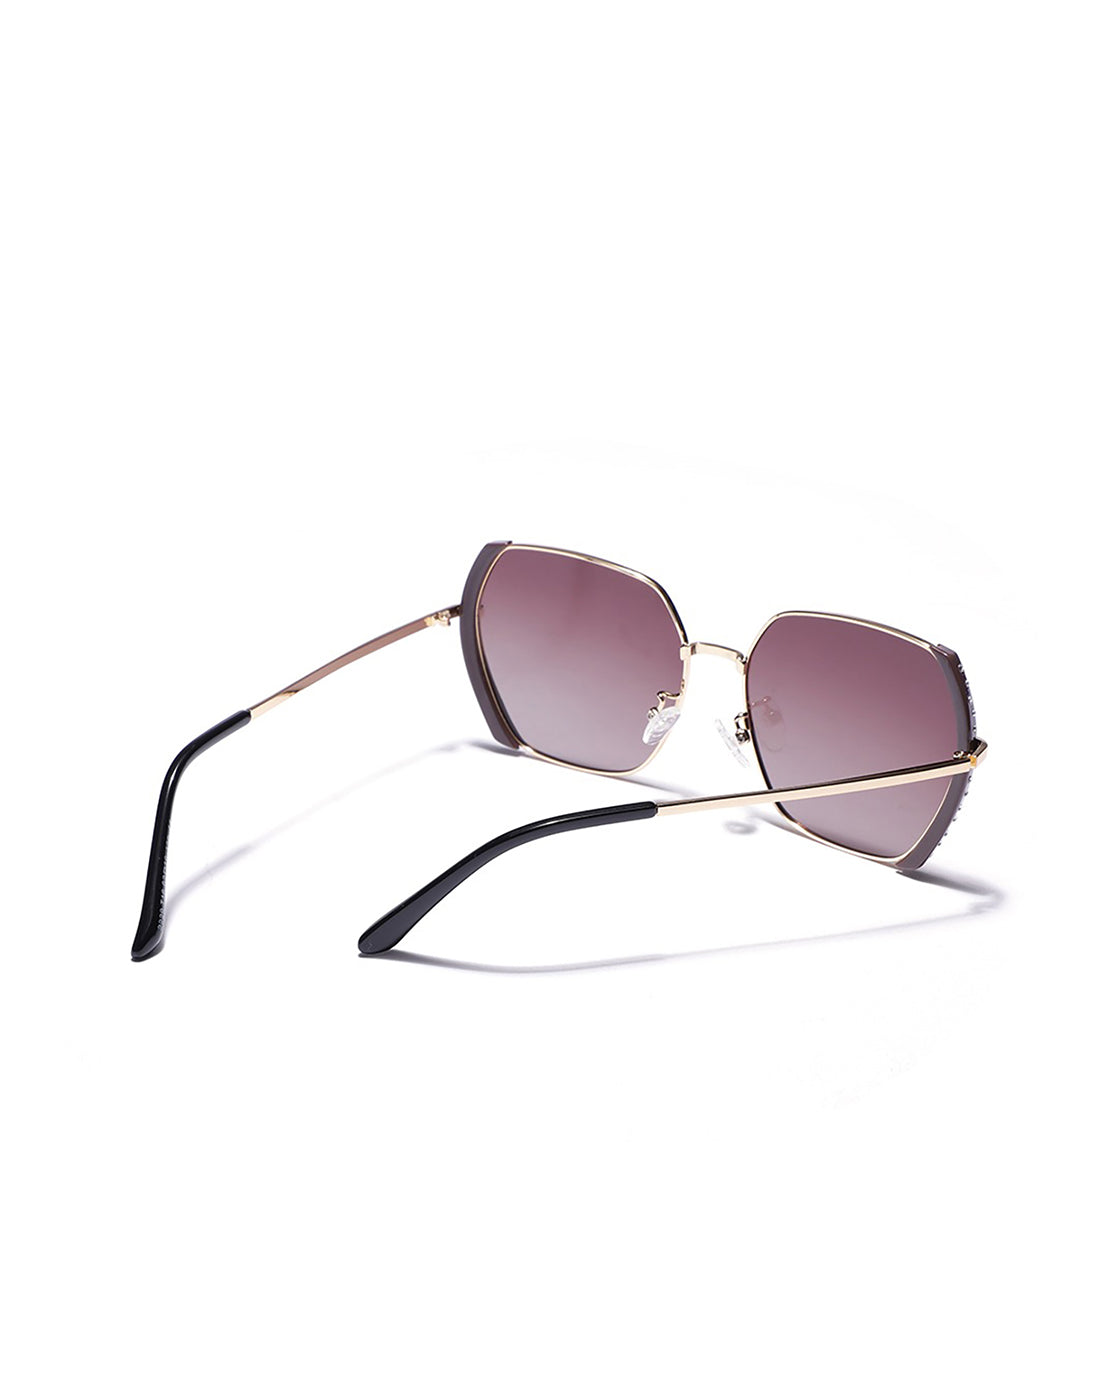 Carlton London Oversized Sunglasses With Uv Protected Lens For Women